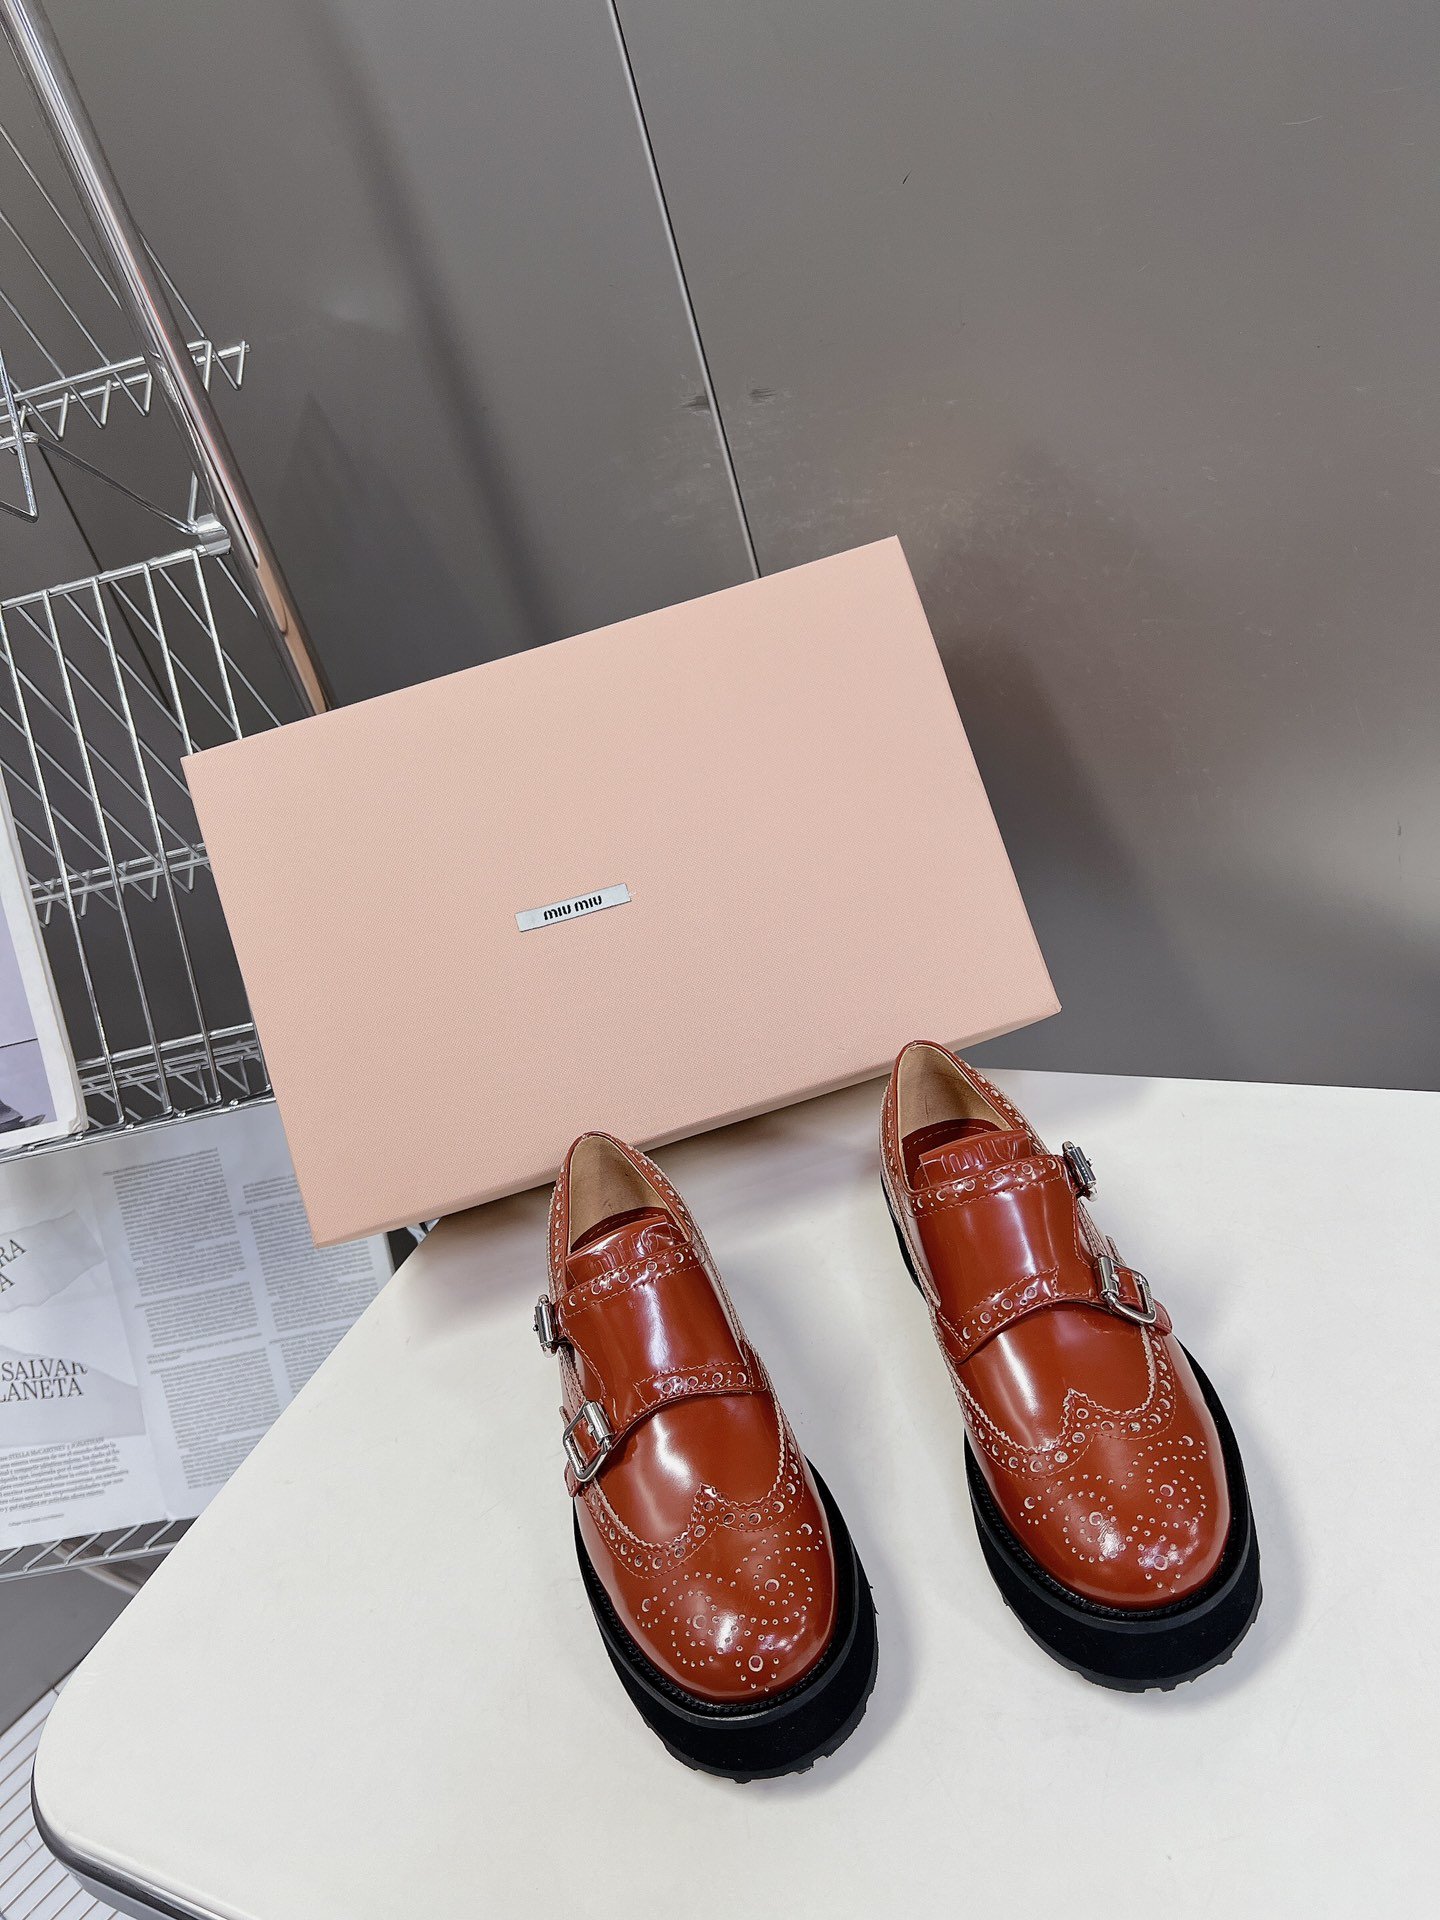 MiuMiu谬谬宣布携手鞋履品牌Churchs呈现春夏合作系列将品牌传统的正装风范与MiuMiu品牌蕴藉